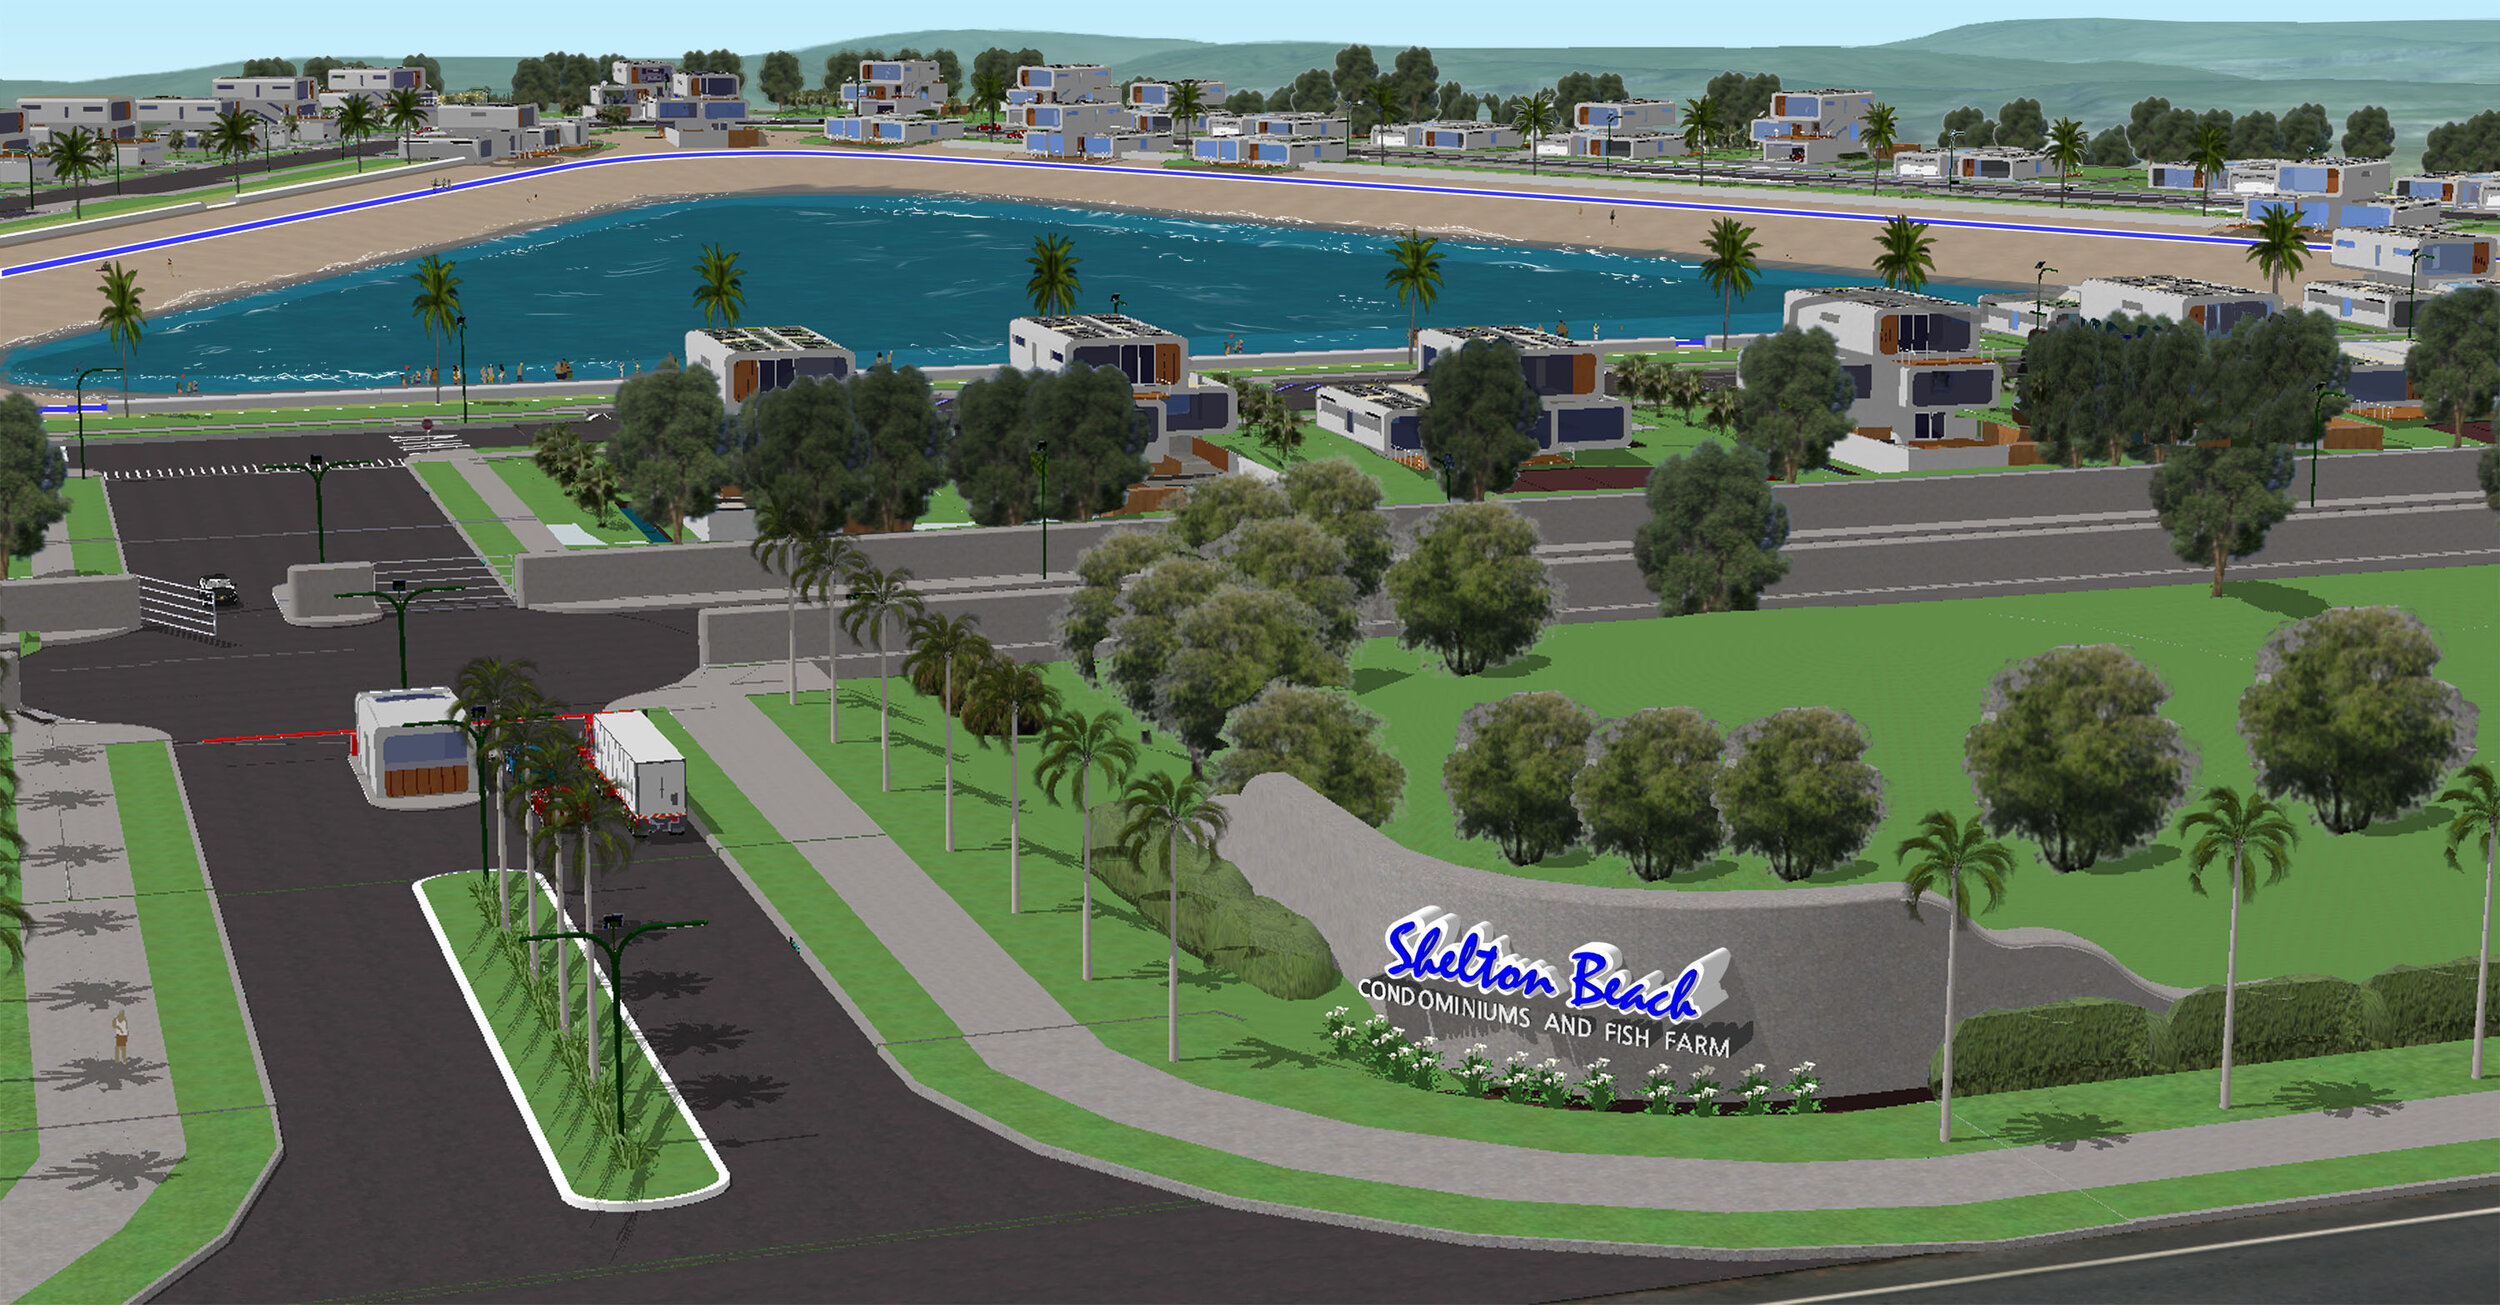 Shelton Beach Development